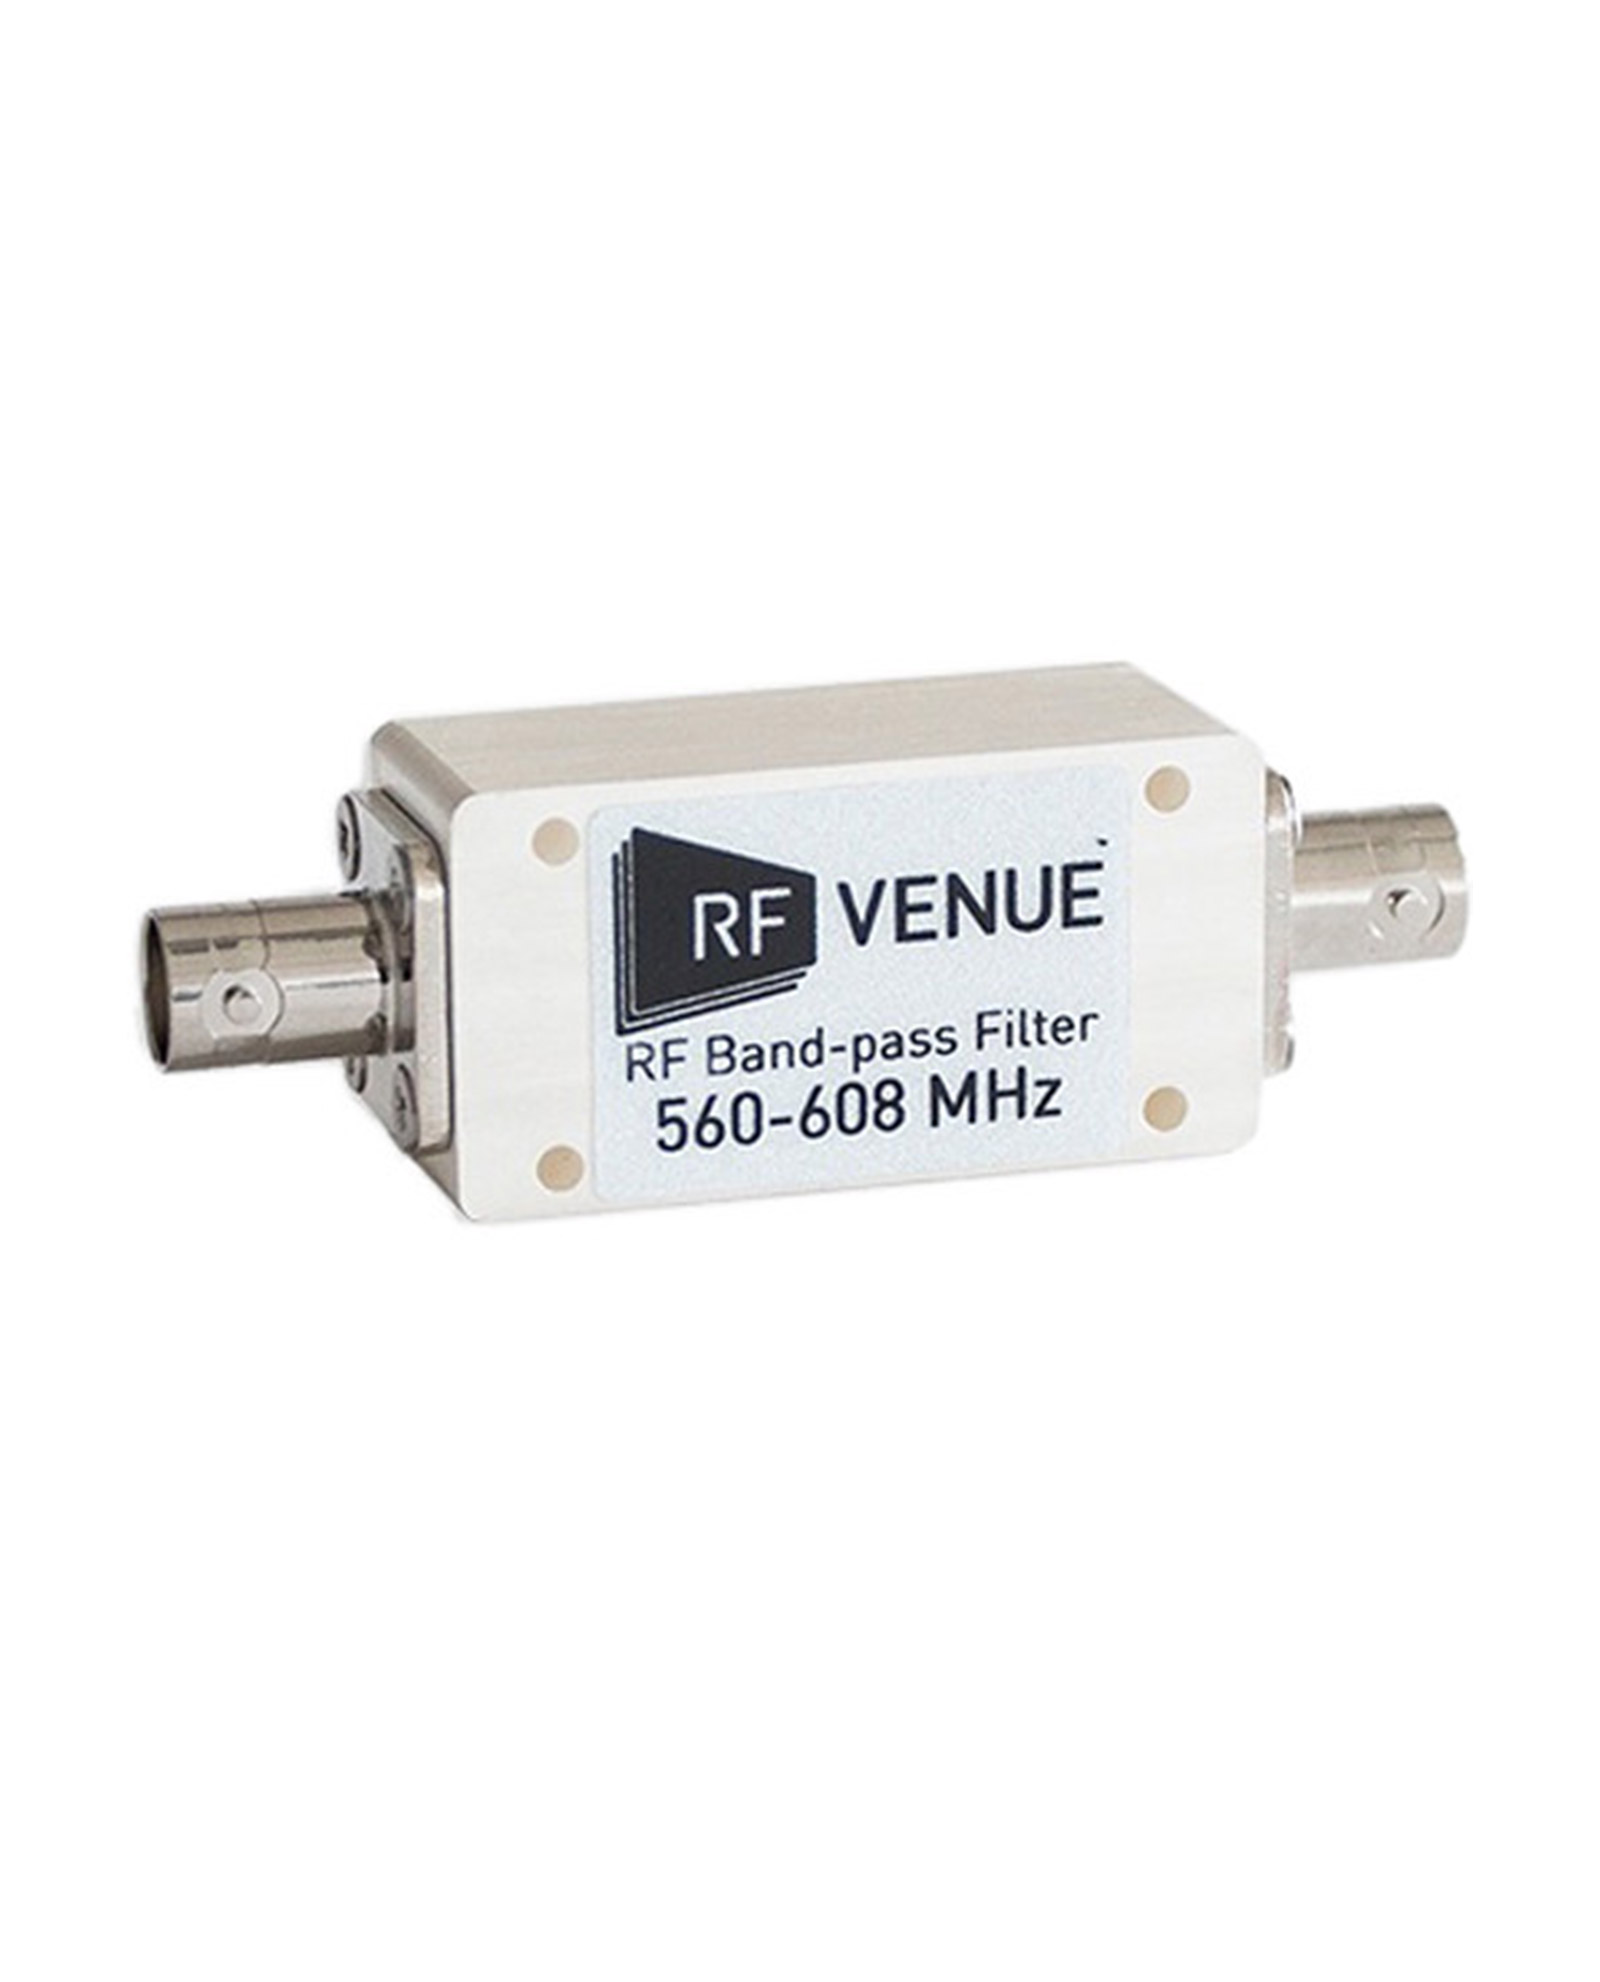 Rf Venue Rf Band Pass Filter (560 608 Mhz)